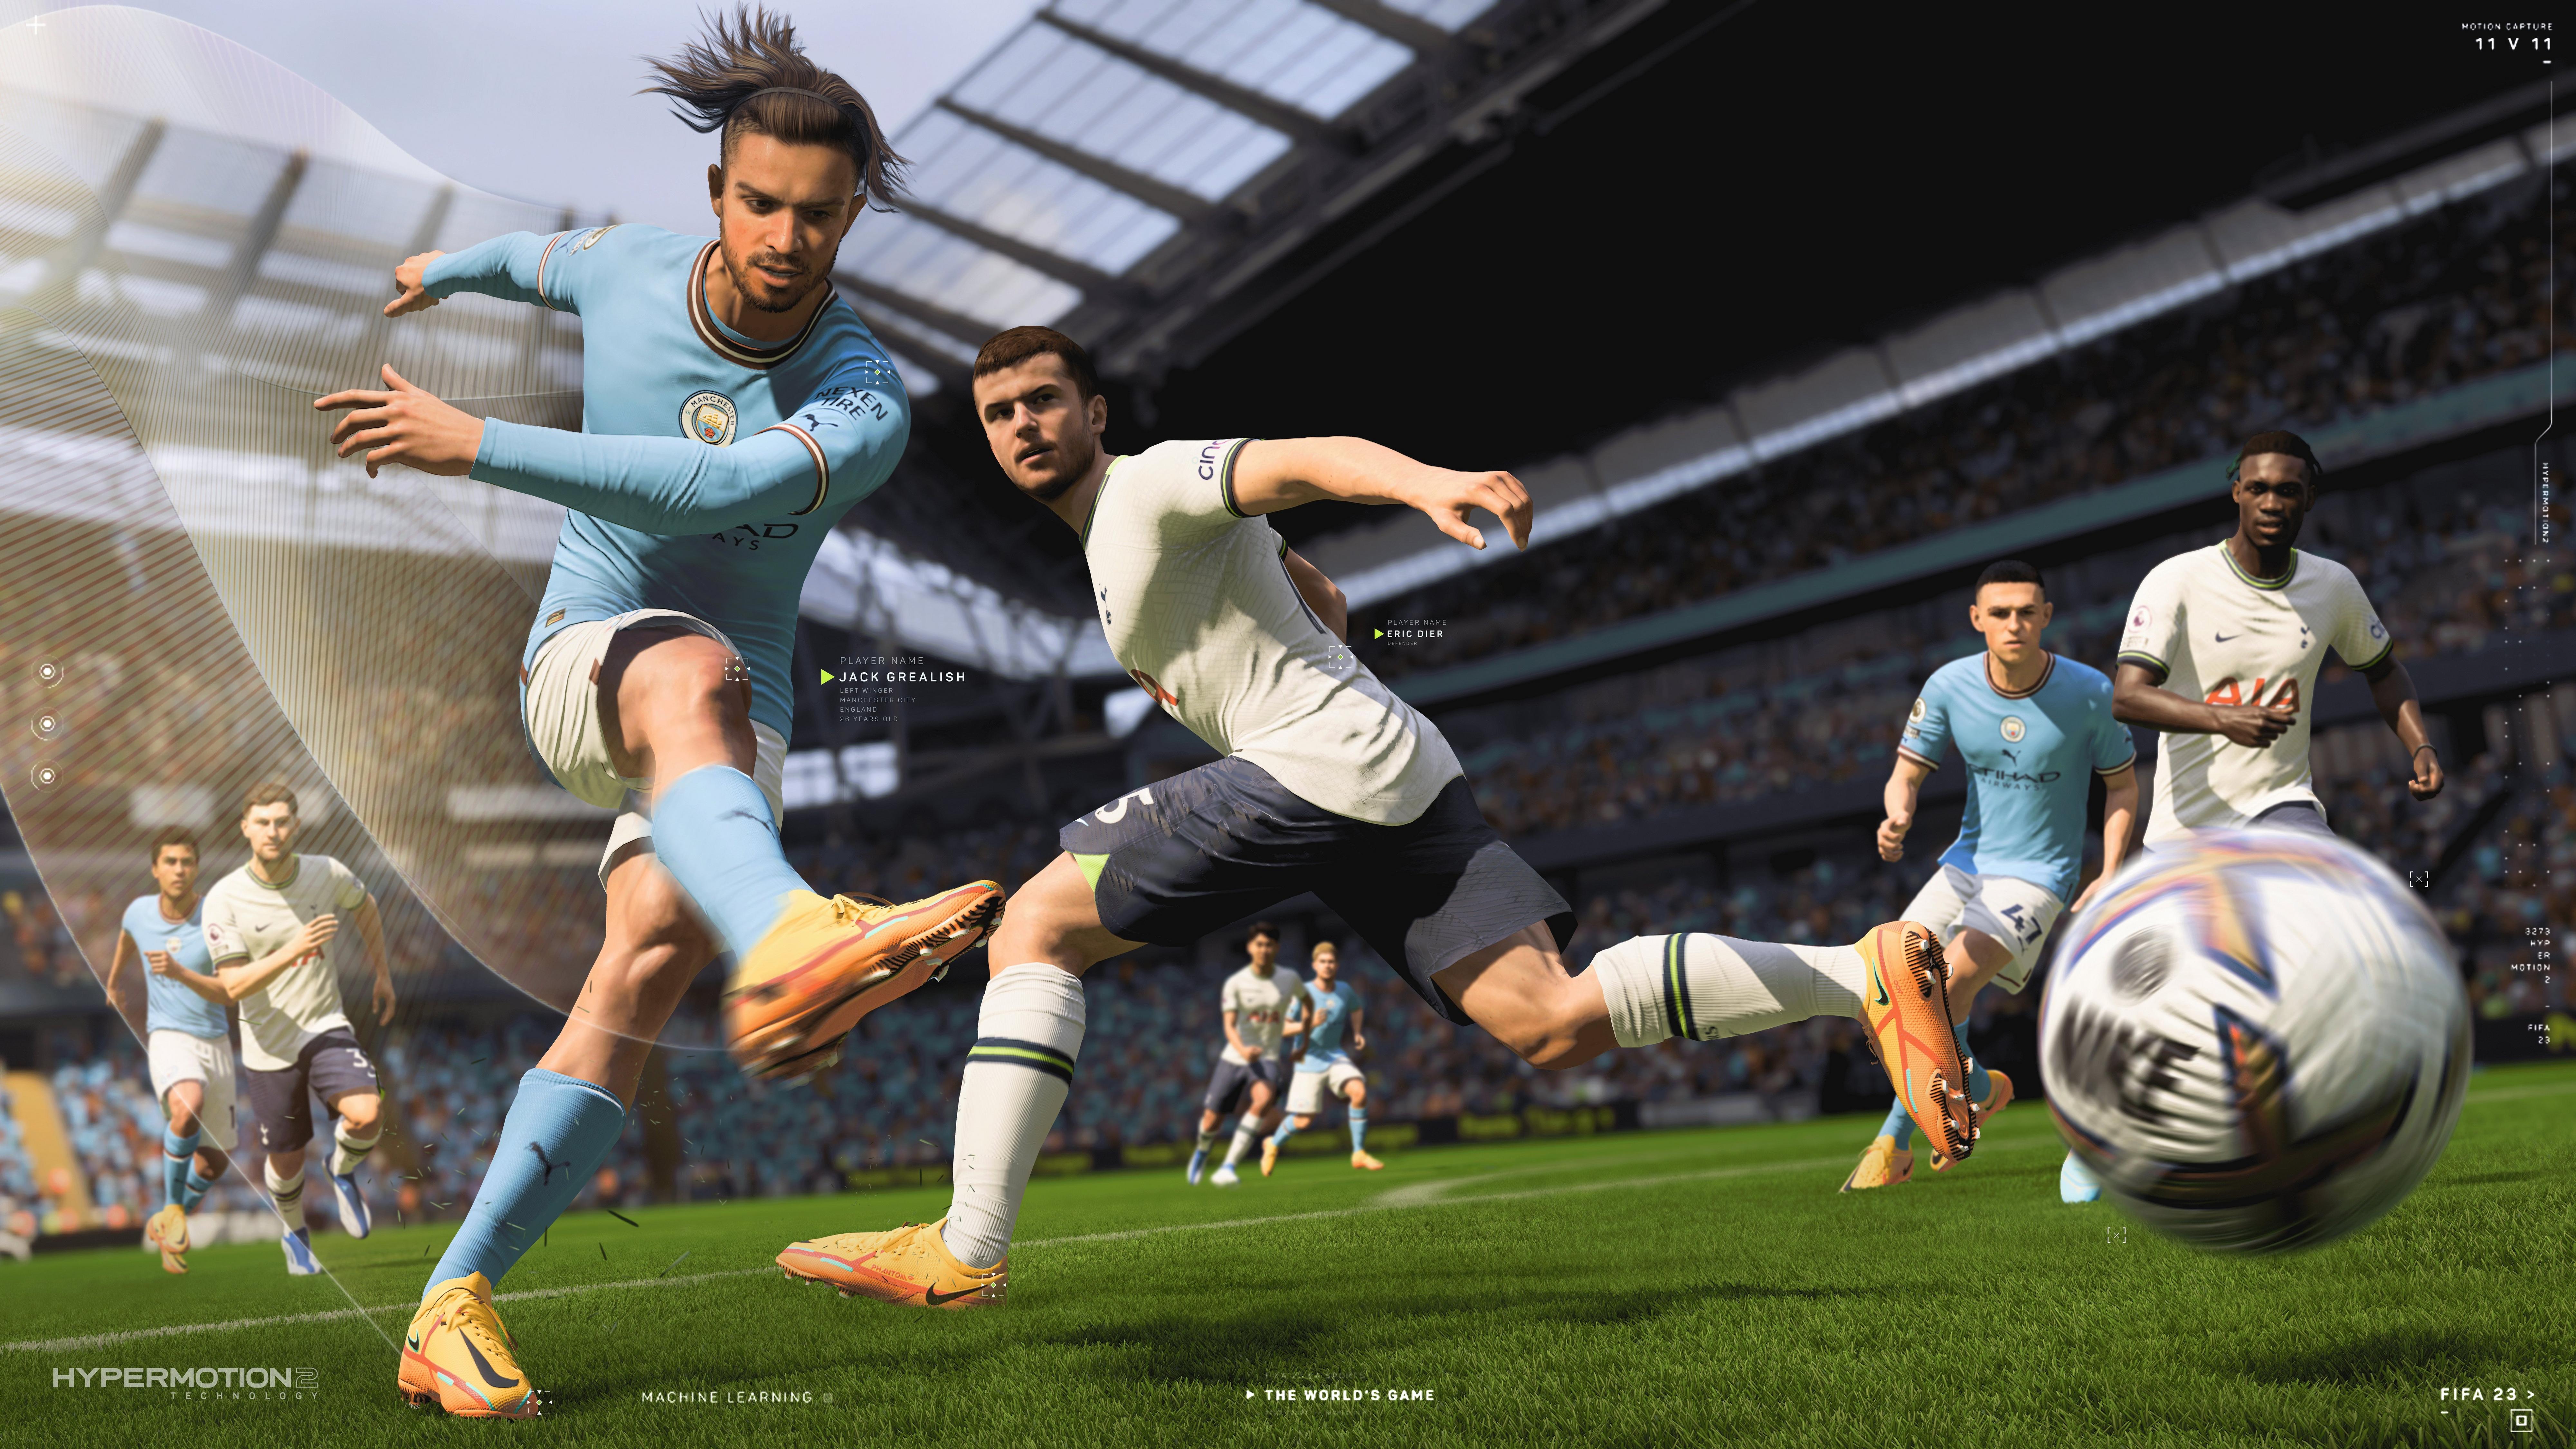 FIFA 23 - PlayStation 5, PlayStation 5